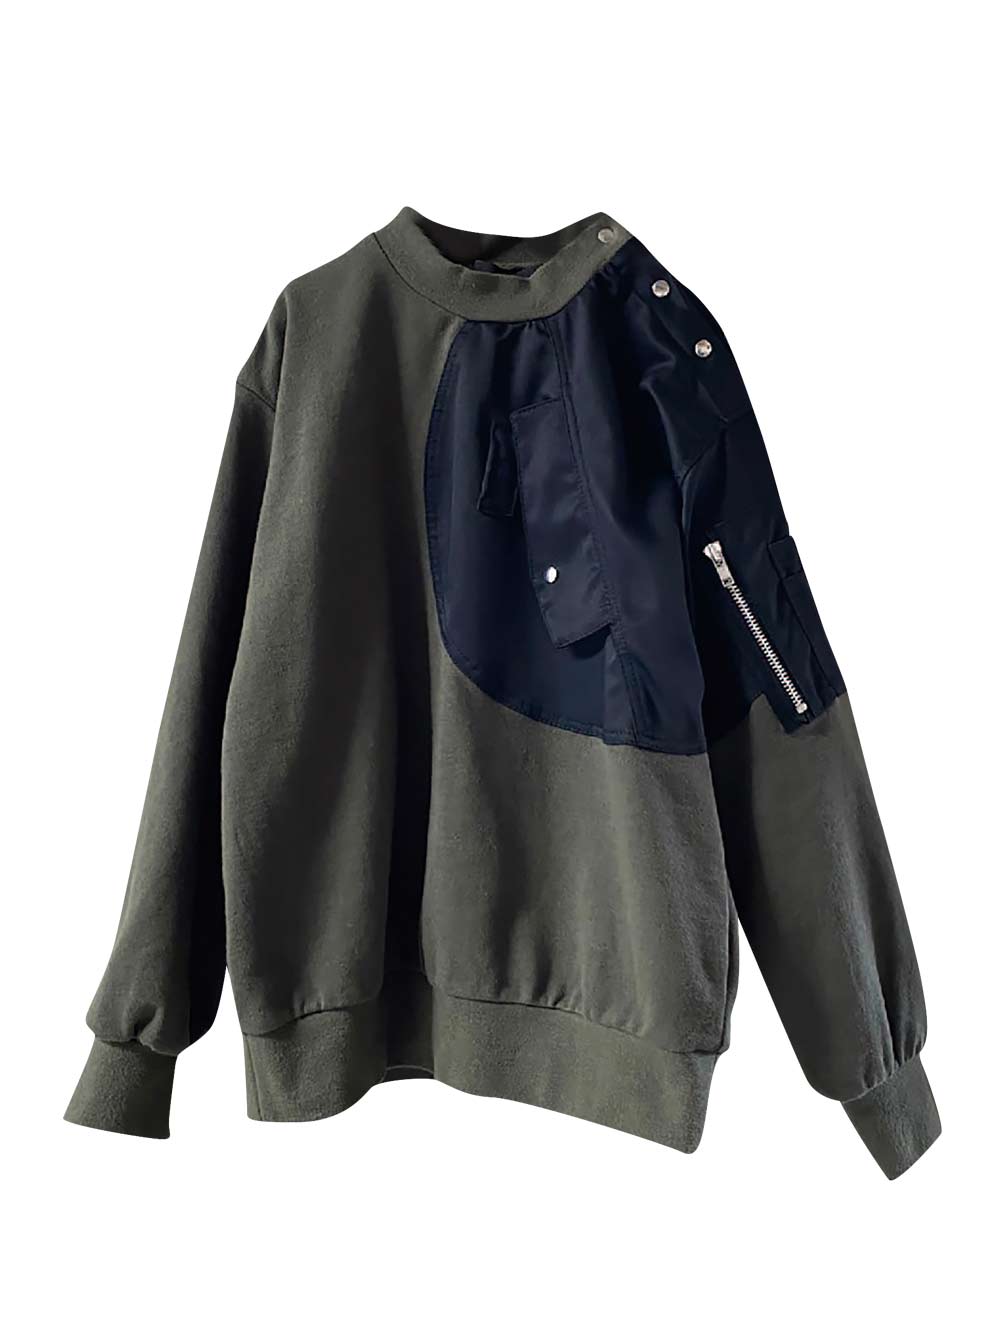 PREORDER: Khaki x Navy Sweatshirt